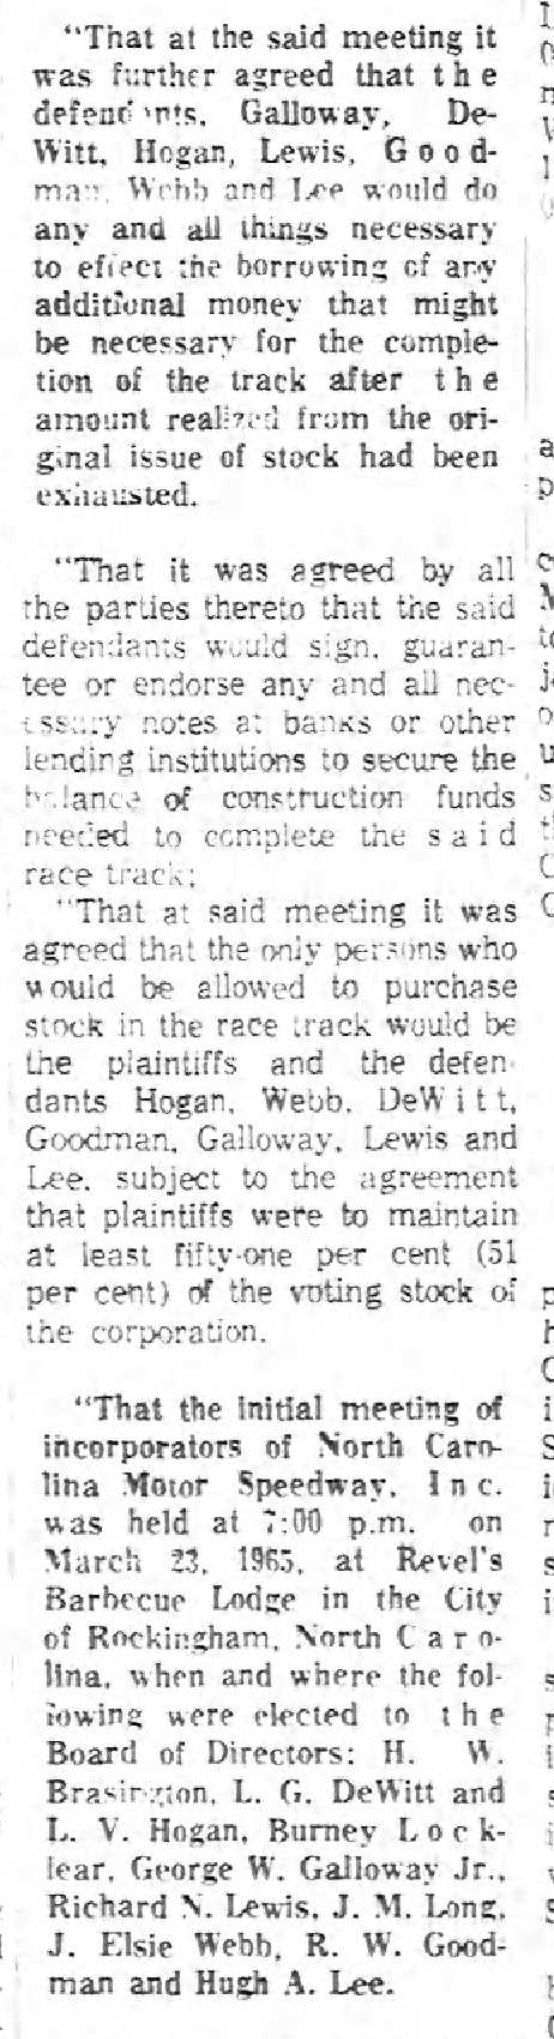 1965 Speedway lawsuit b 2.jpg